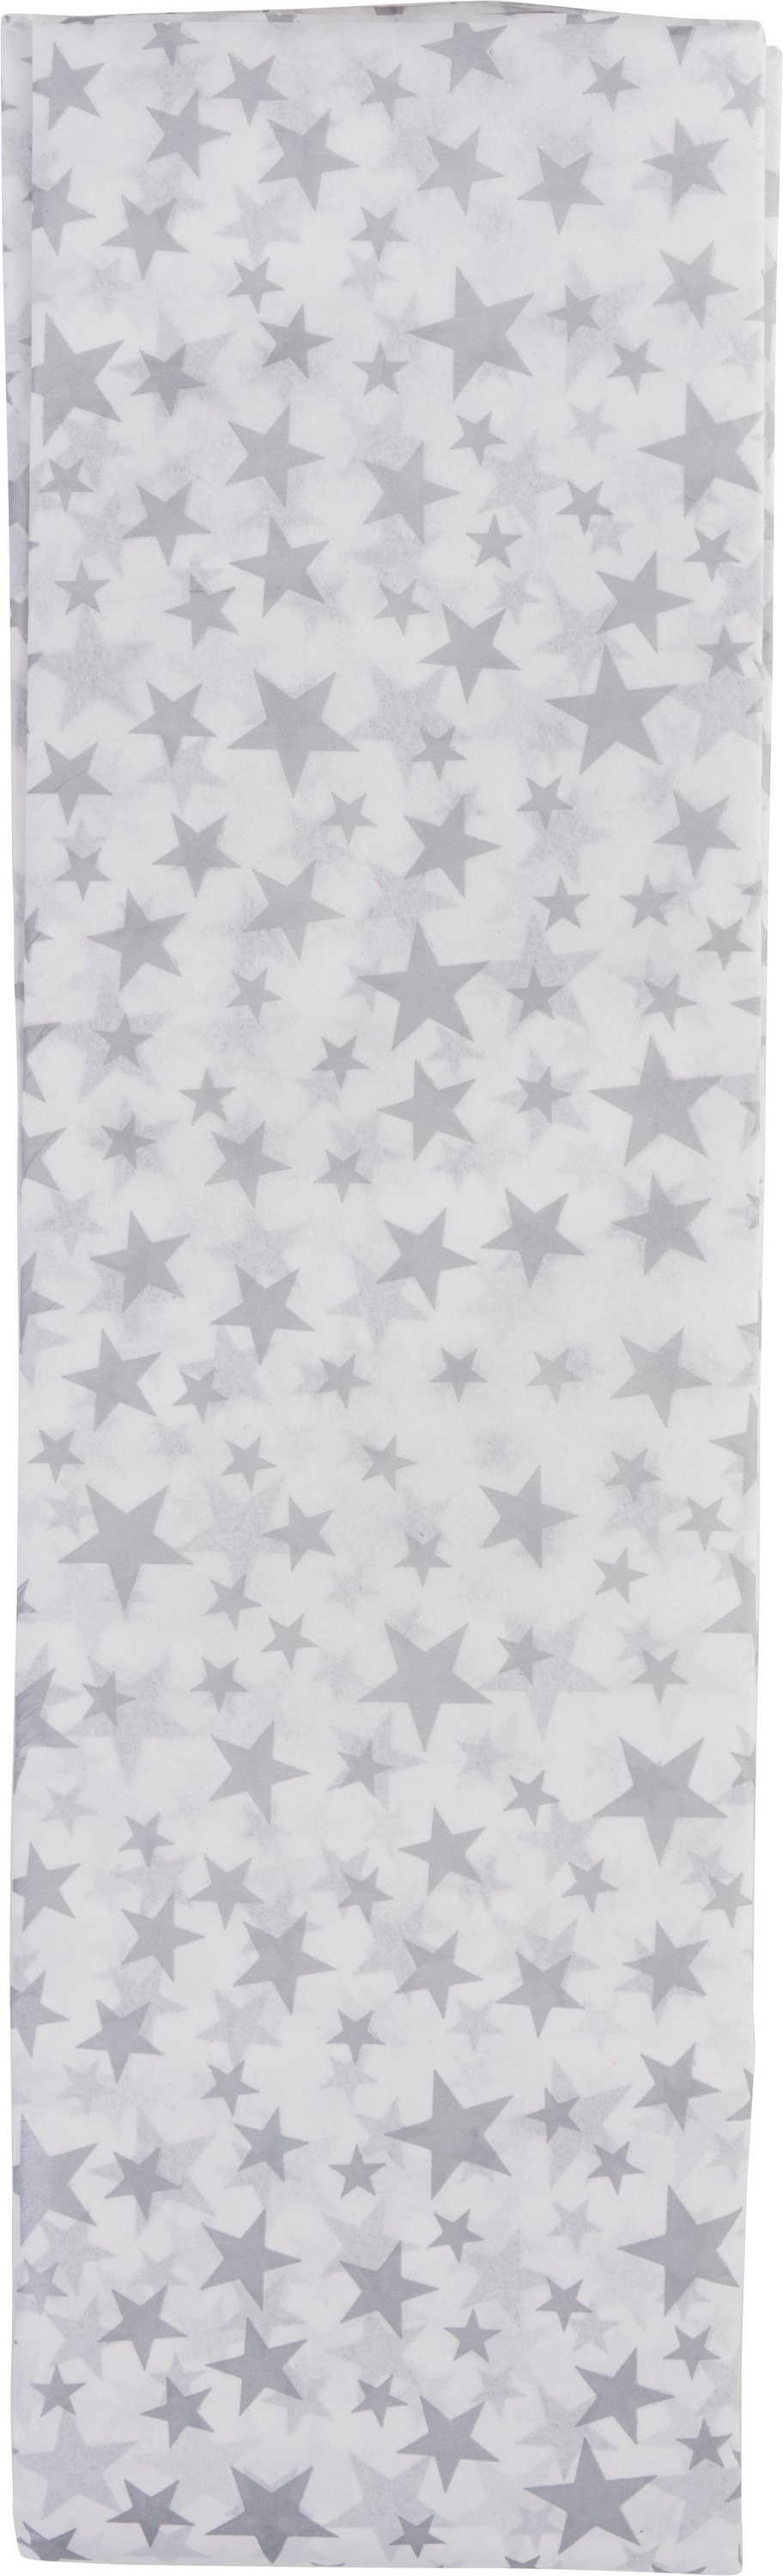 CLAIREFONTAINE Seidenpapier Sterne, 4 Bogen Silber